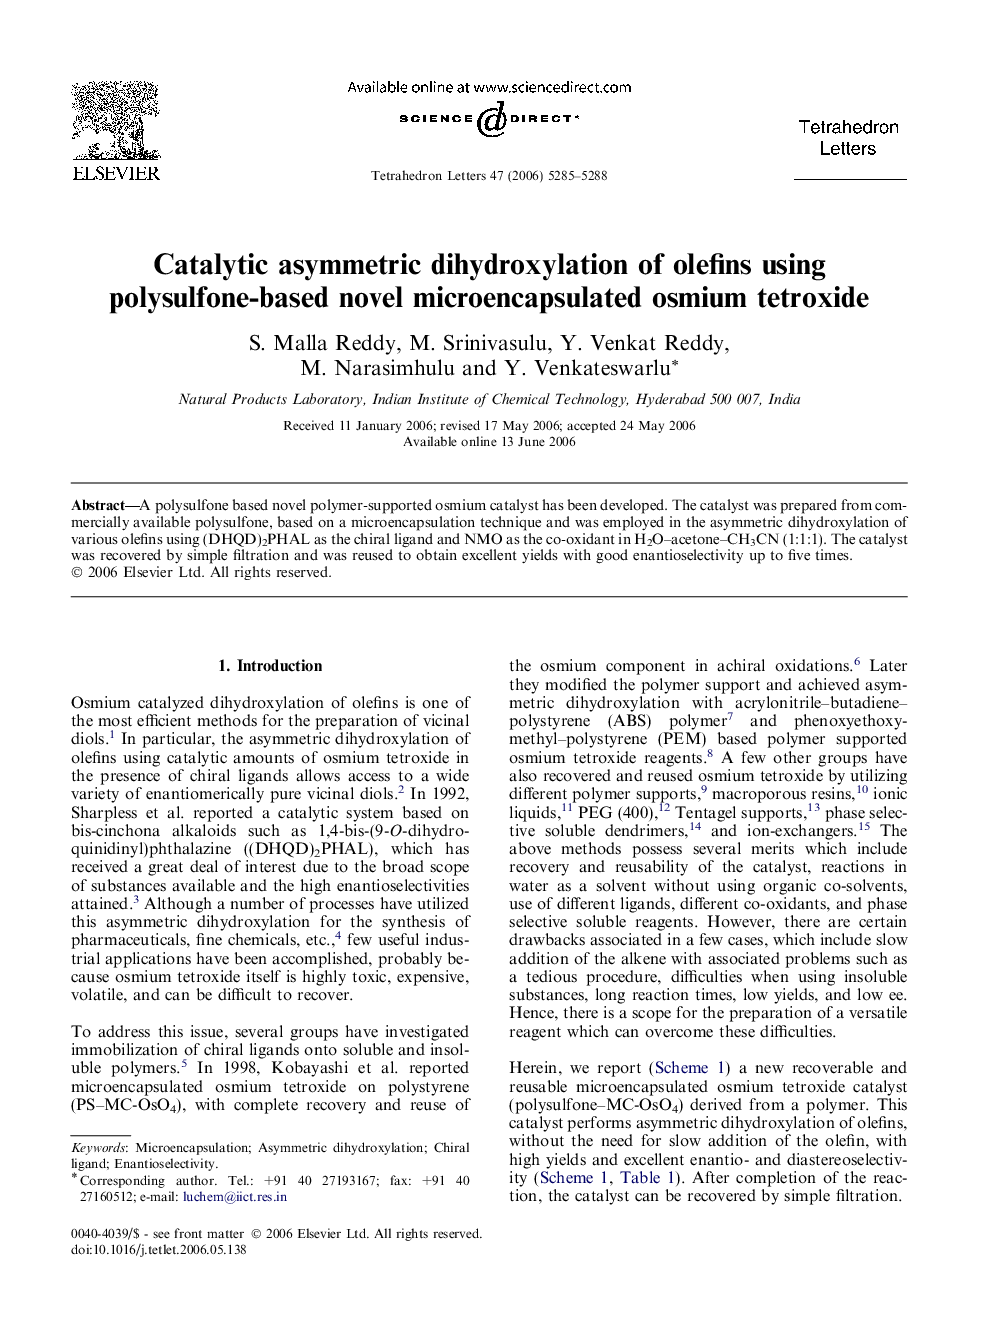 Catalytic asymmetric dihydroxylation of olefins using polysulfone-based novel microencapsulated osmium tetroxide